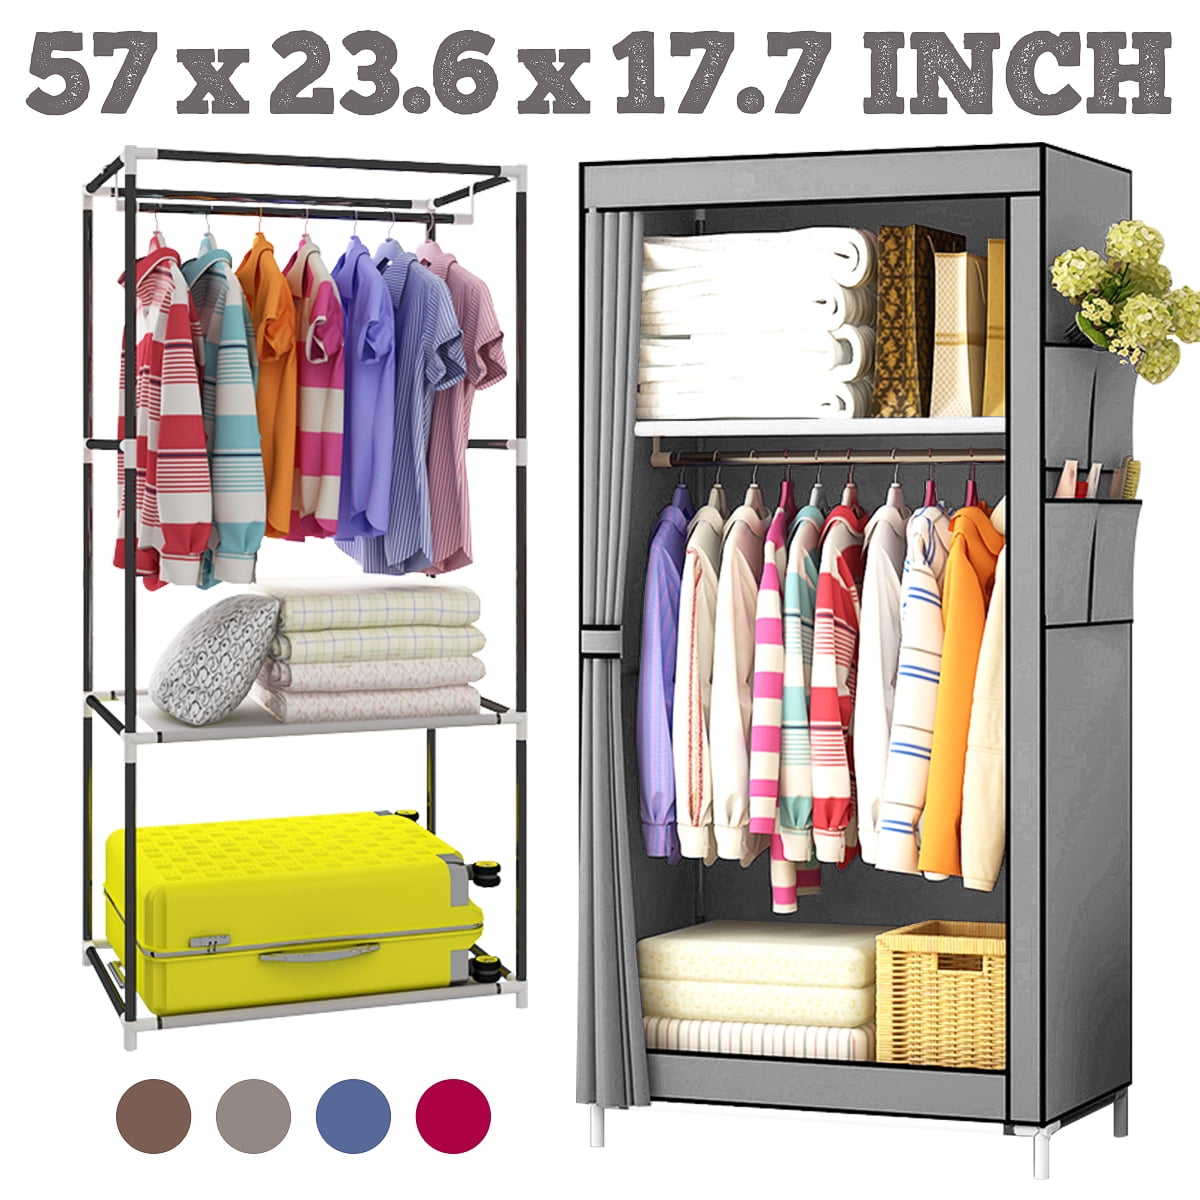 64"Portable Closet Storage Organizer Wardrobe Clothes Rack,Shelves,Grey,UK FAST 